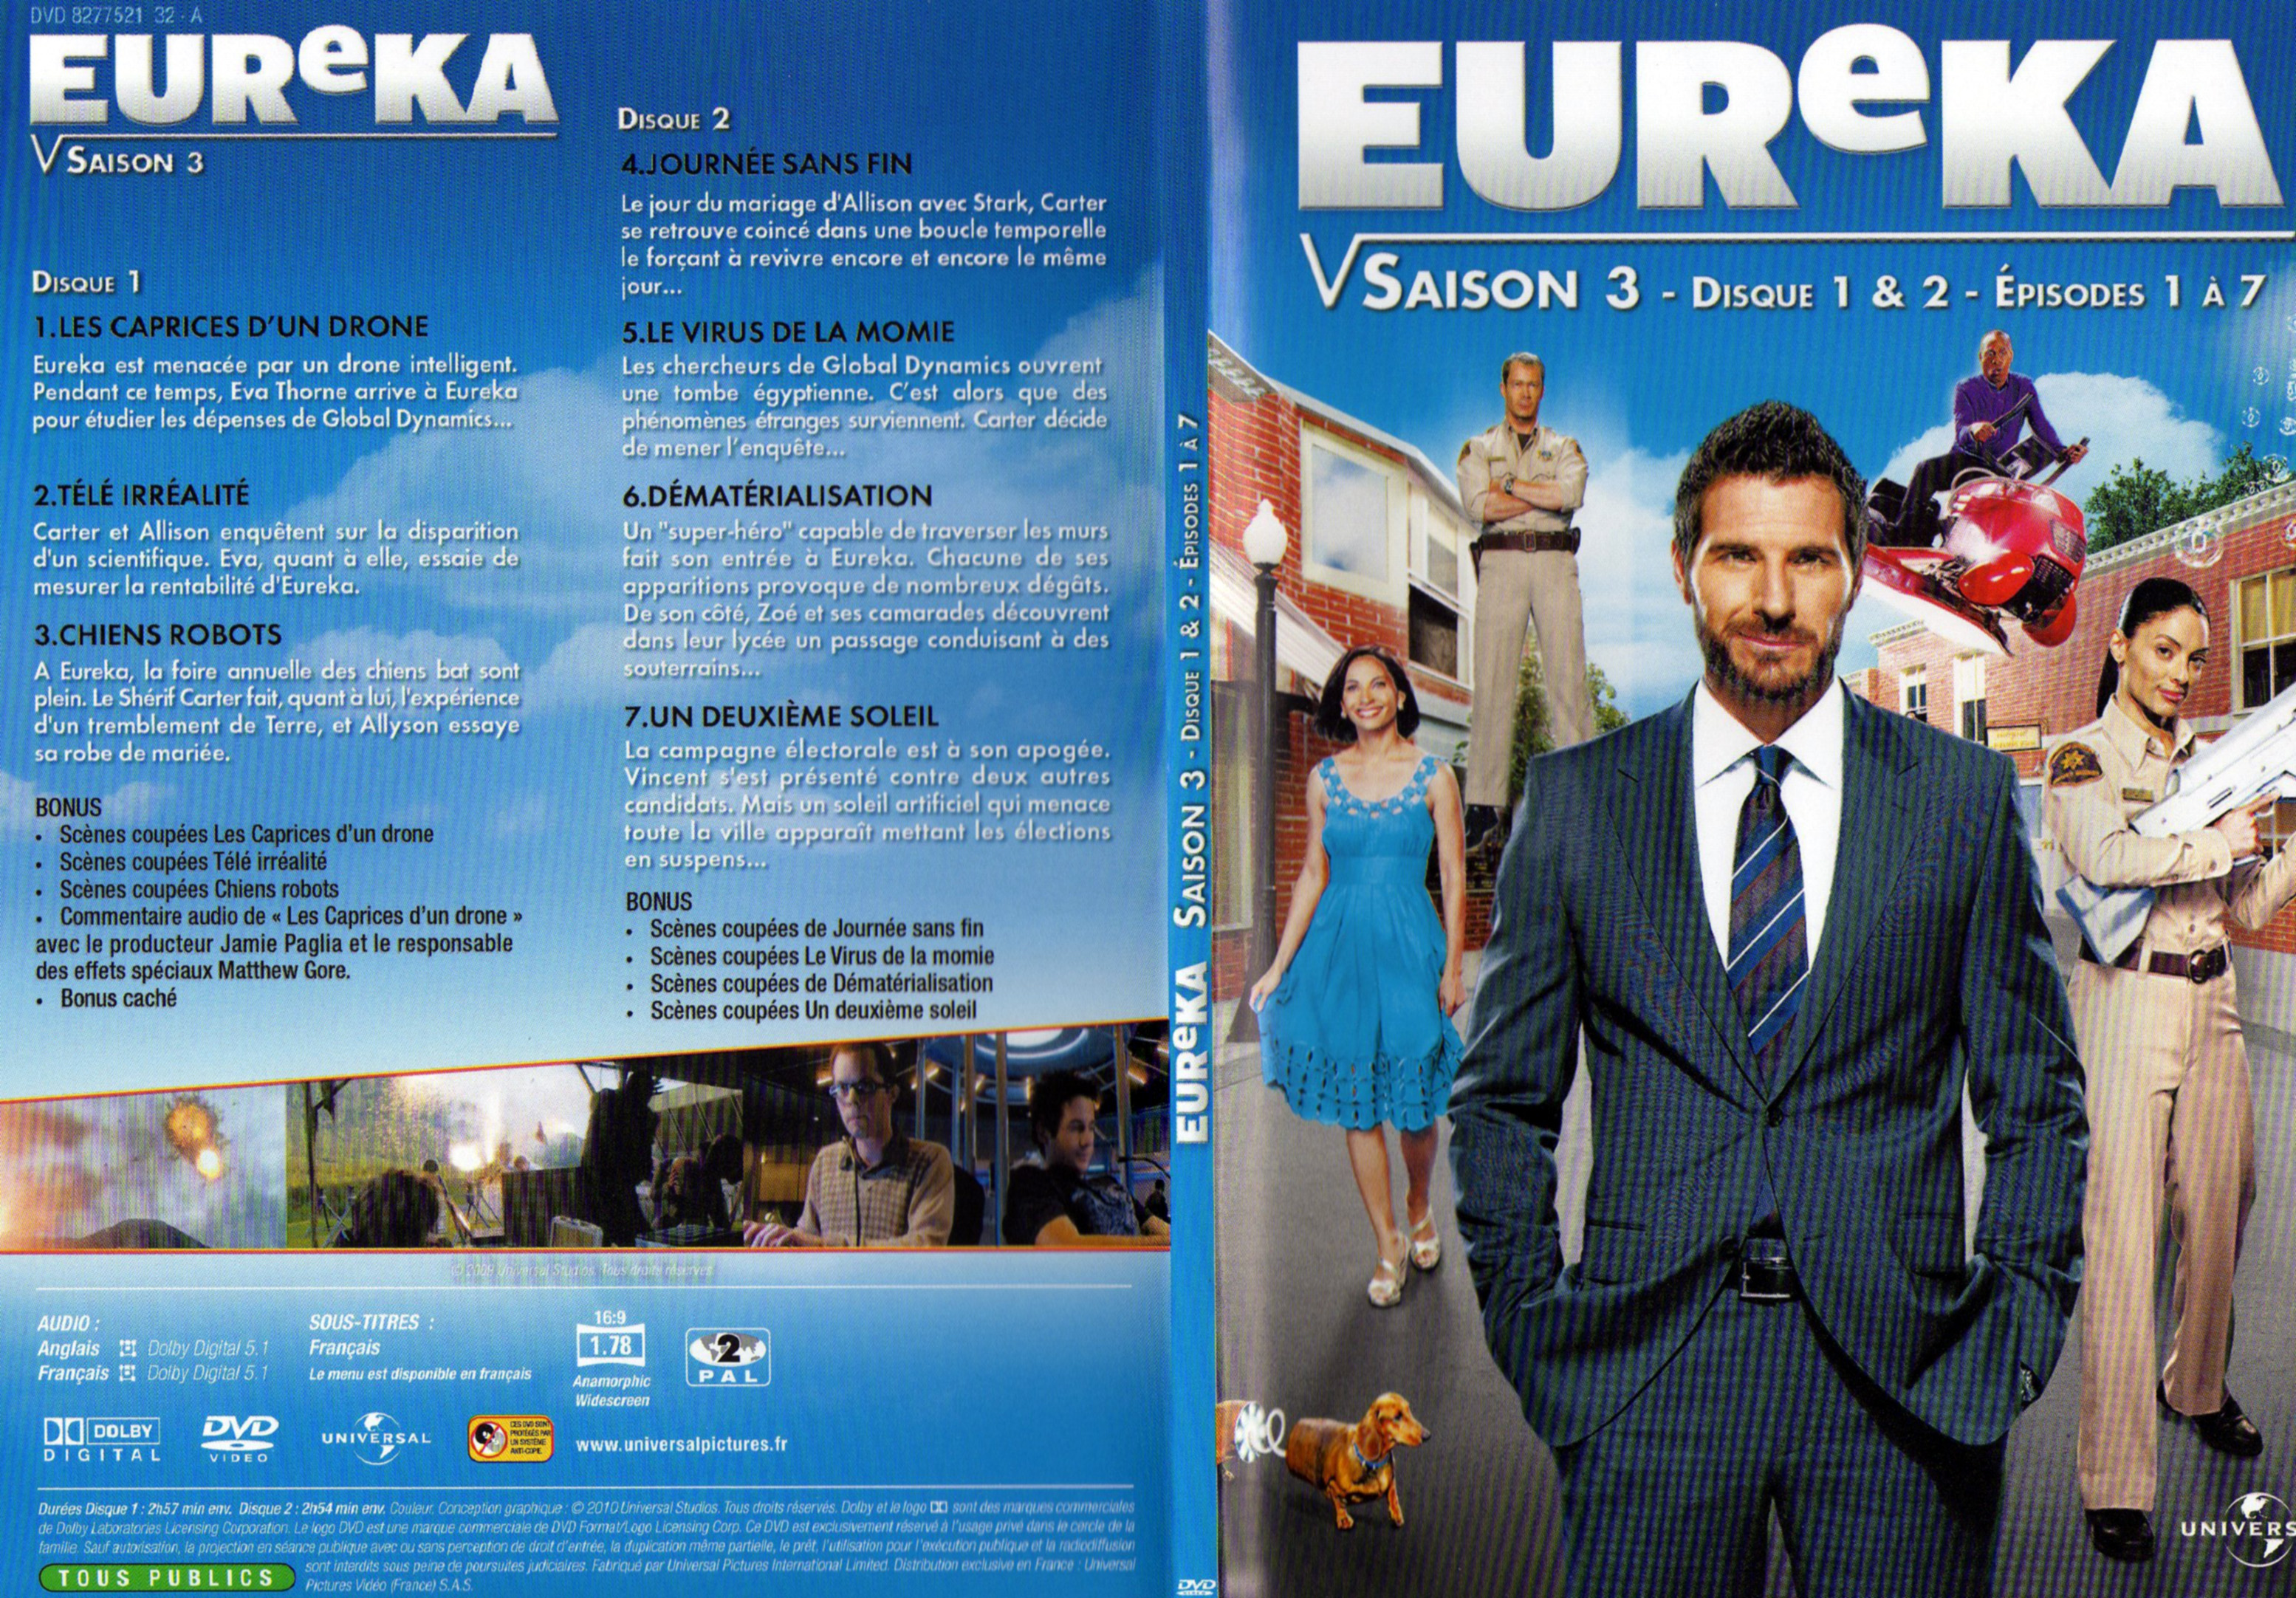 Jaquette DVD Eureka Saison 3 DVD 1